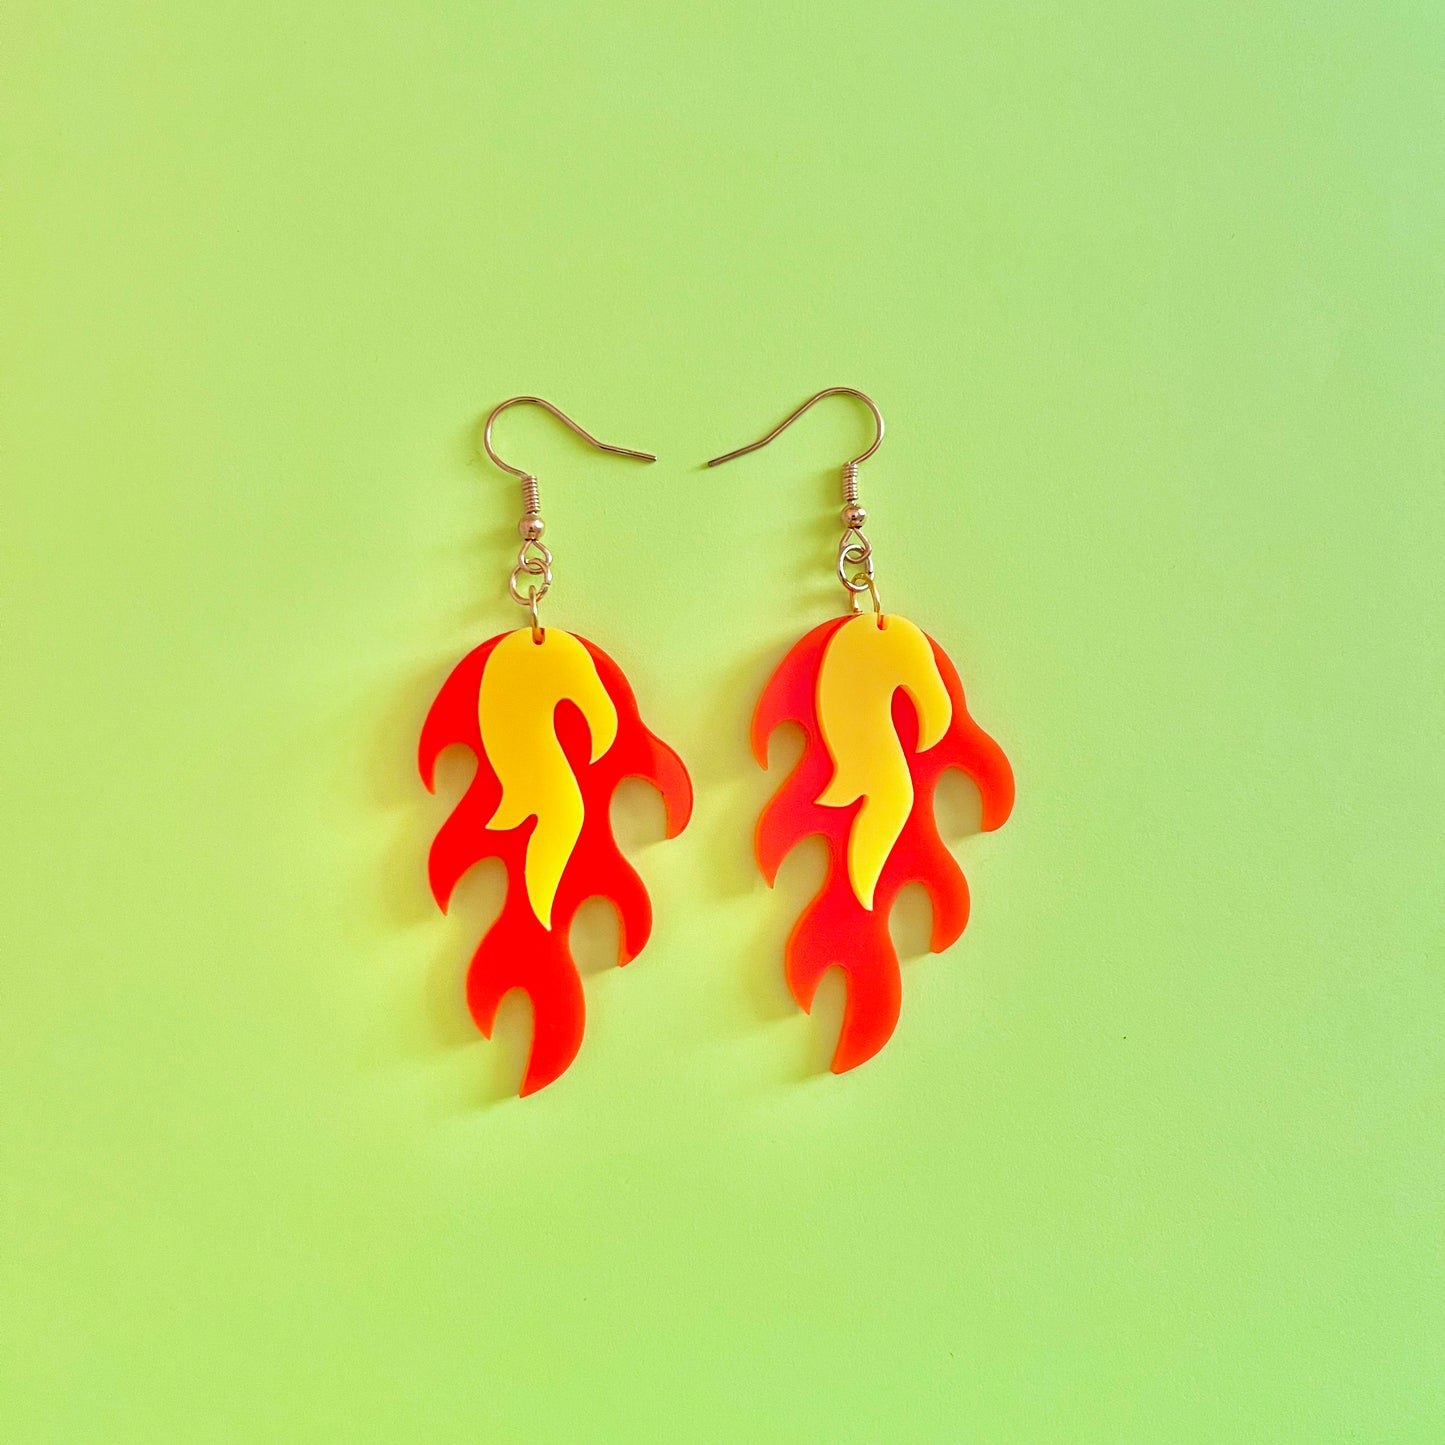 Mini Flame Drop Earrings